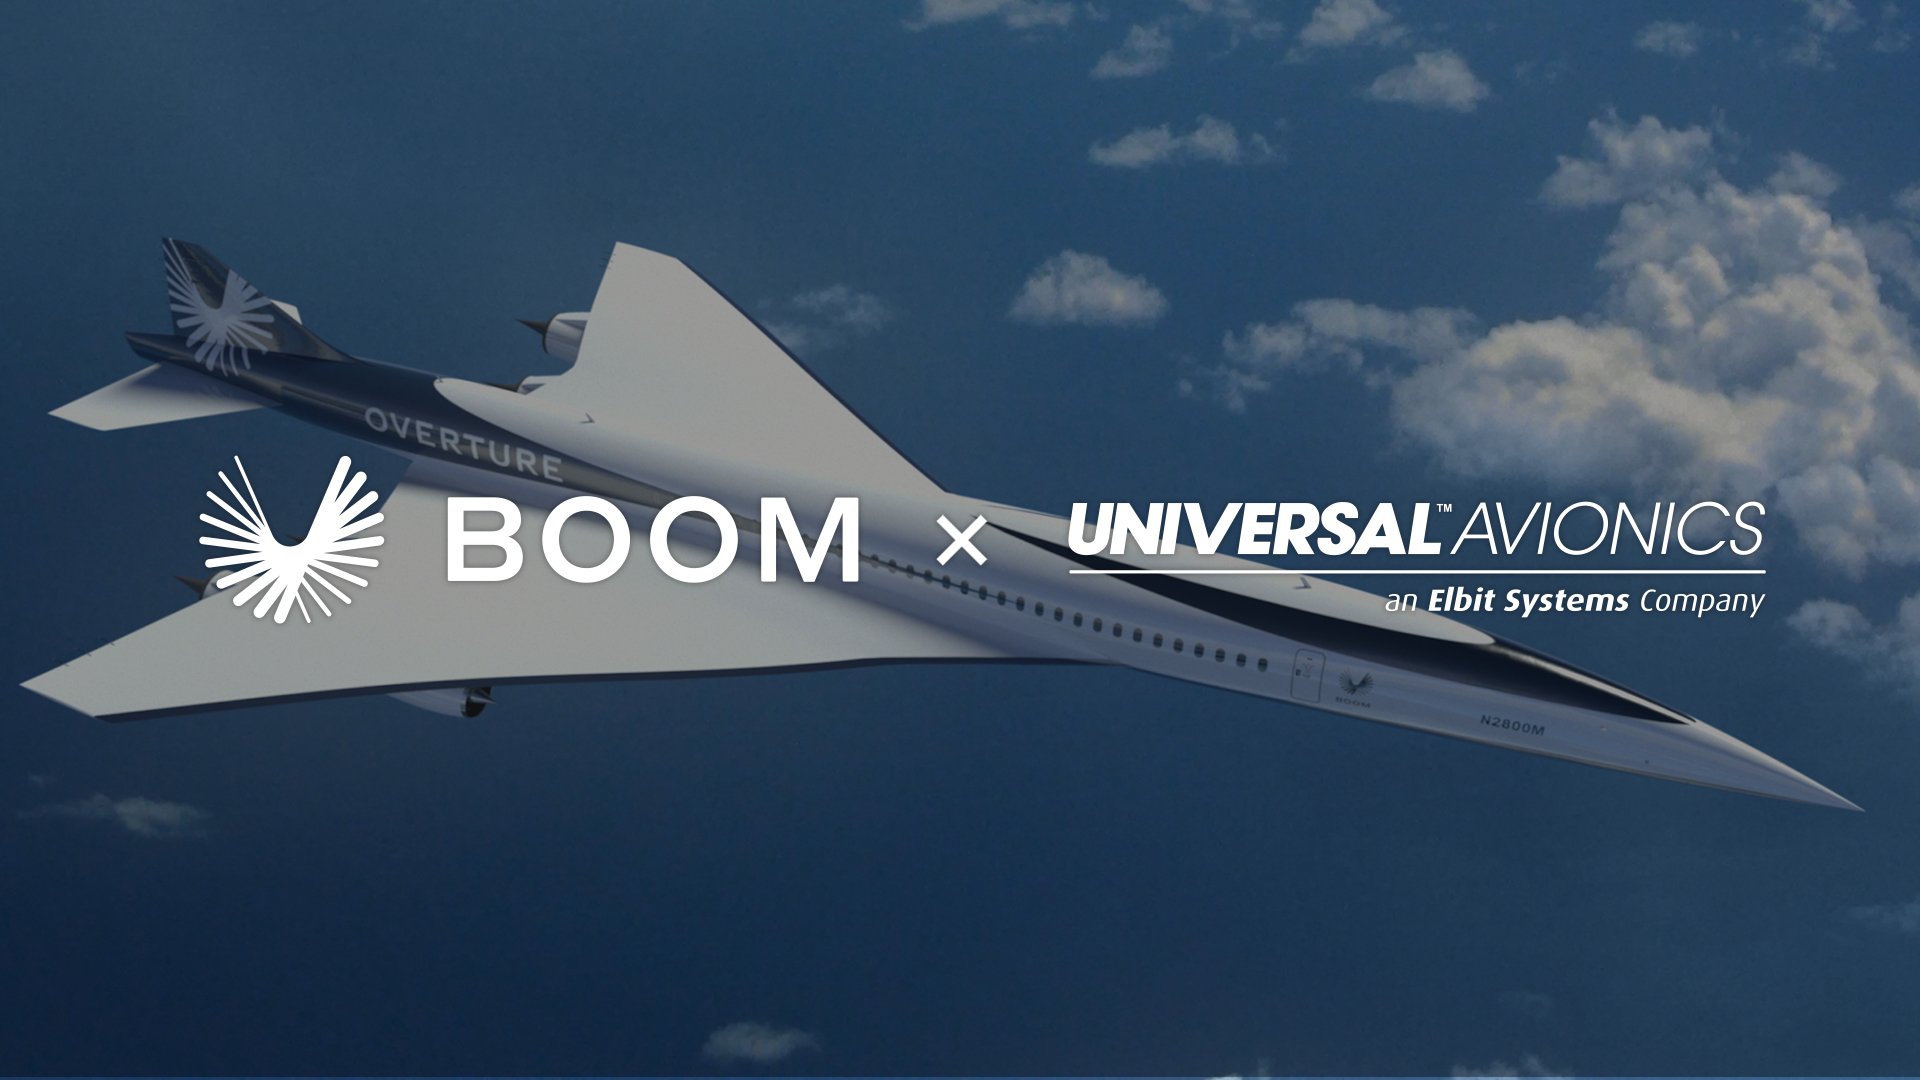 Partnership with Boom Supersonic and Universal Avionics